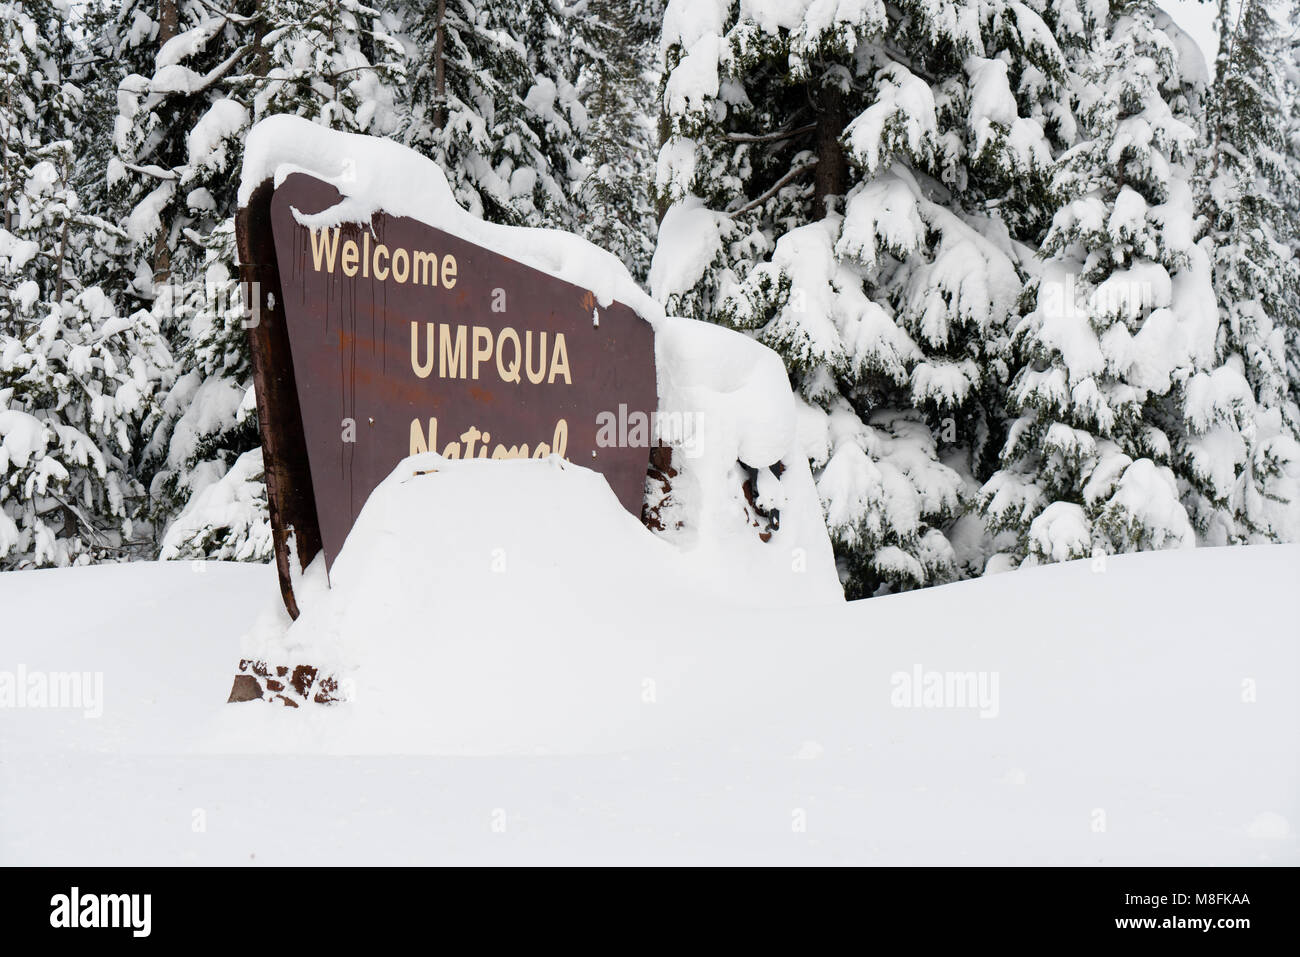 La nieve fresca cubriendo la frontera signo marcador entrando Umpqua National Forest Oregon Foto de stock